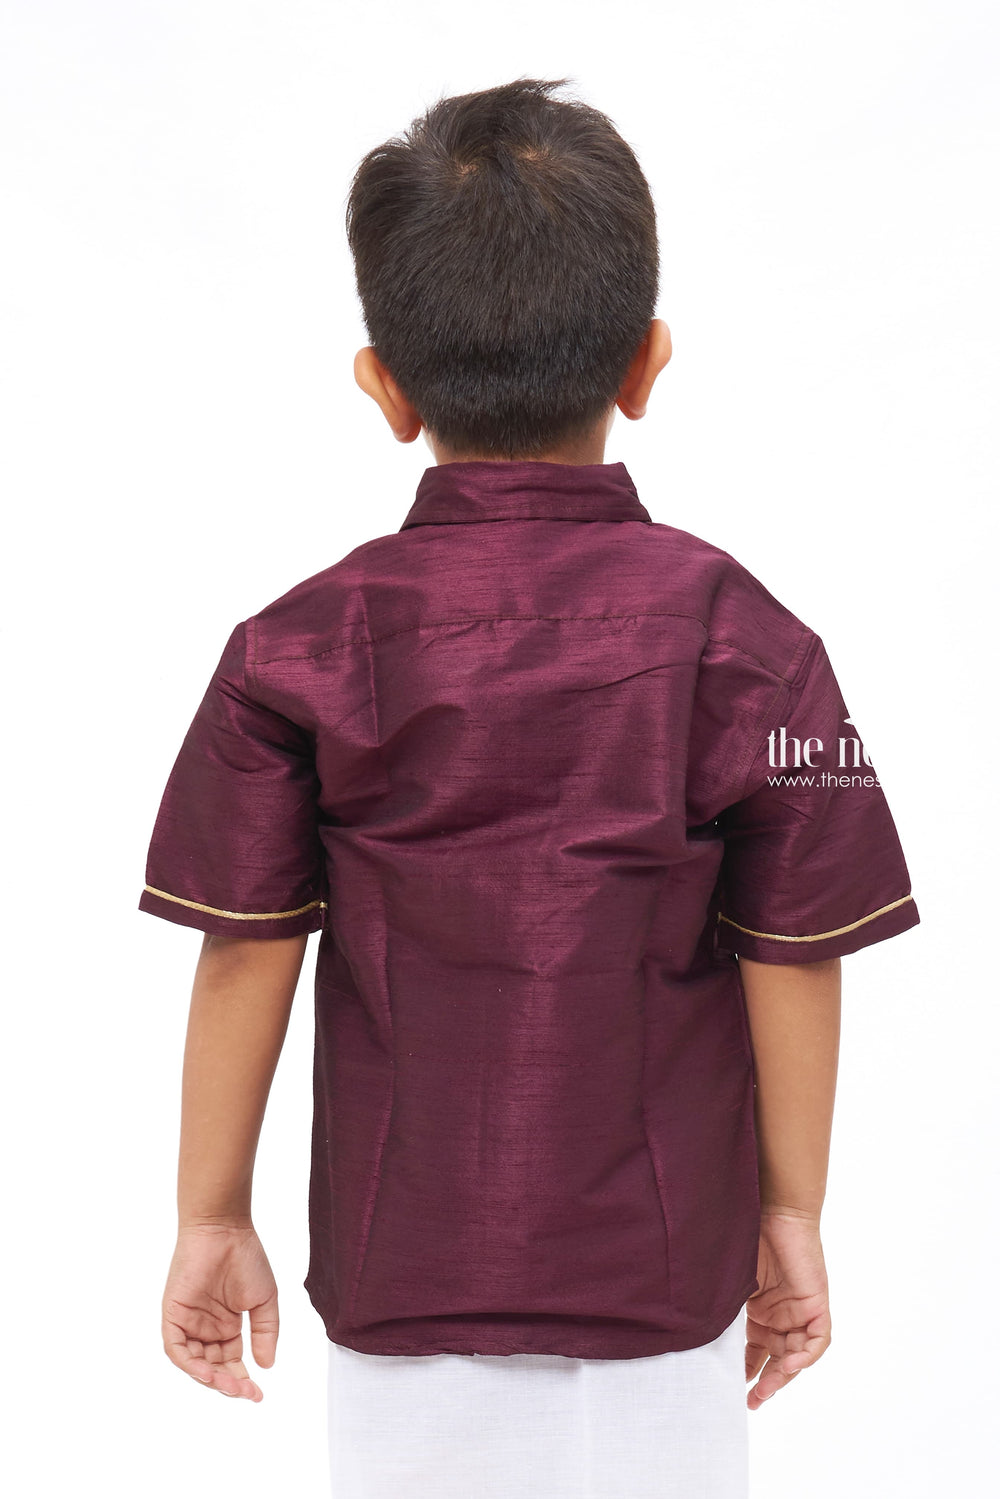 The Nesavu Boys Silk Shirt Premium Boys Deep Purple Silk Shirt: Classic Elegance for Special Occasions & Festive Events Nesavu Premium Boys Deep Purple Silk Shirt - Classic Elegance | The Nesavu